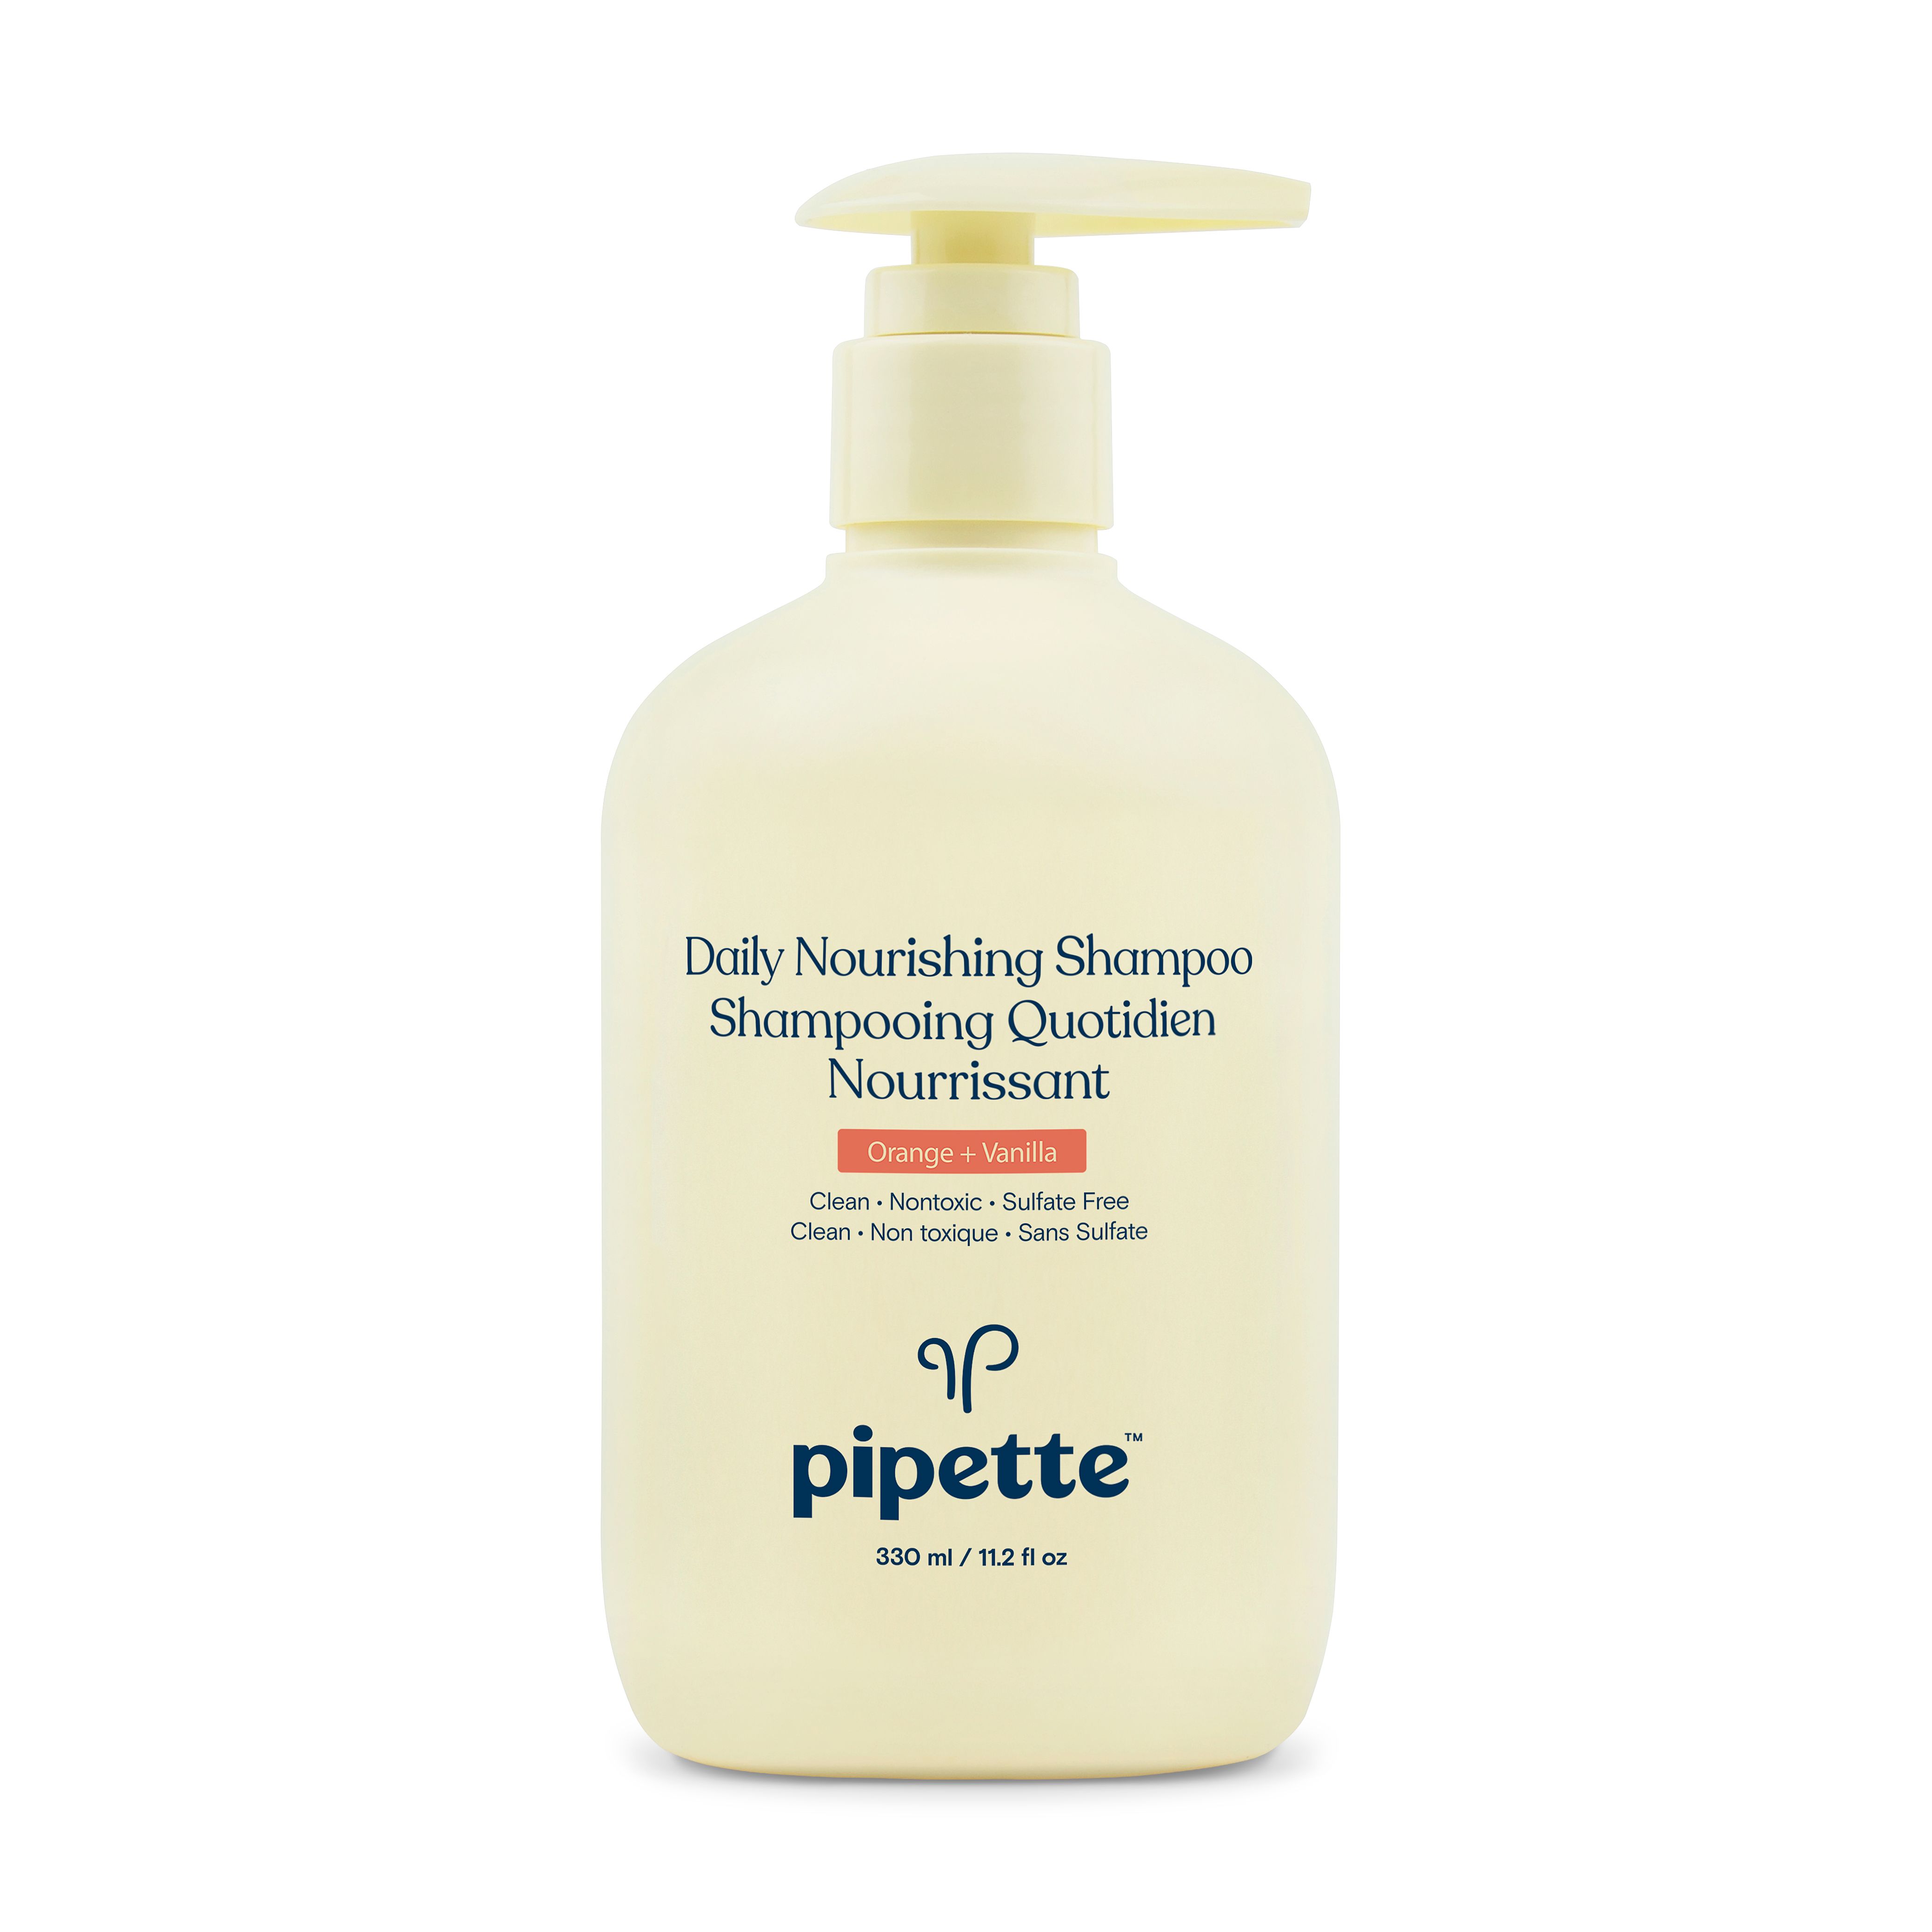 DISCPipette Daily Nourishing Shampoo - 11.2 fl oz